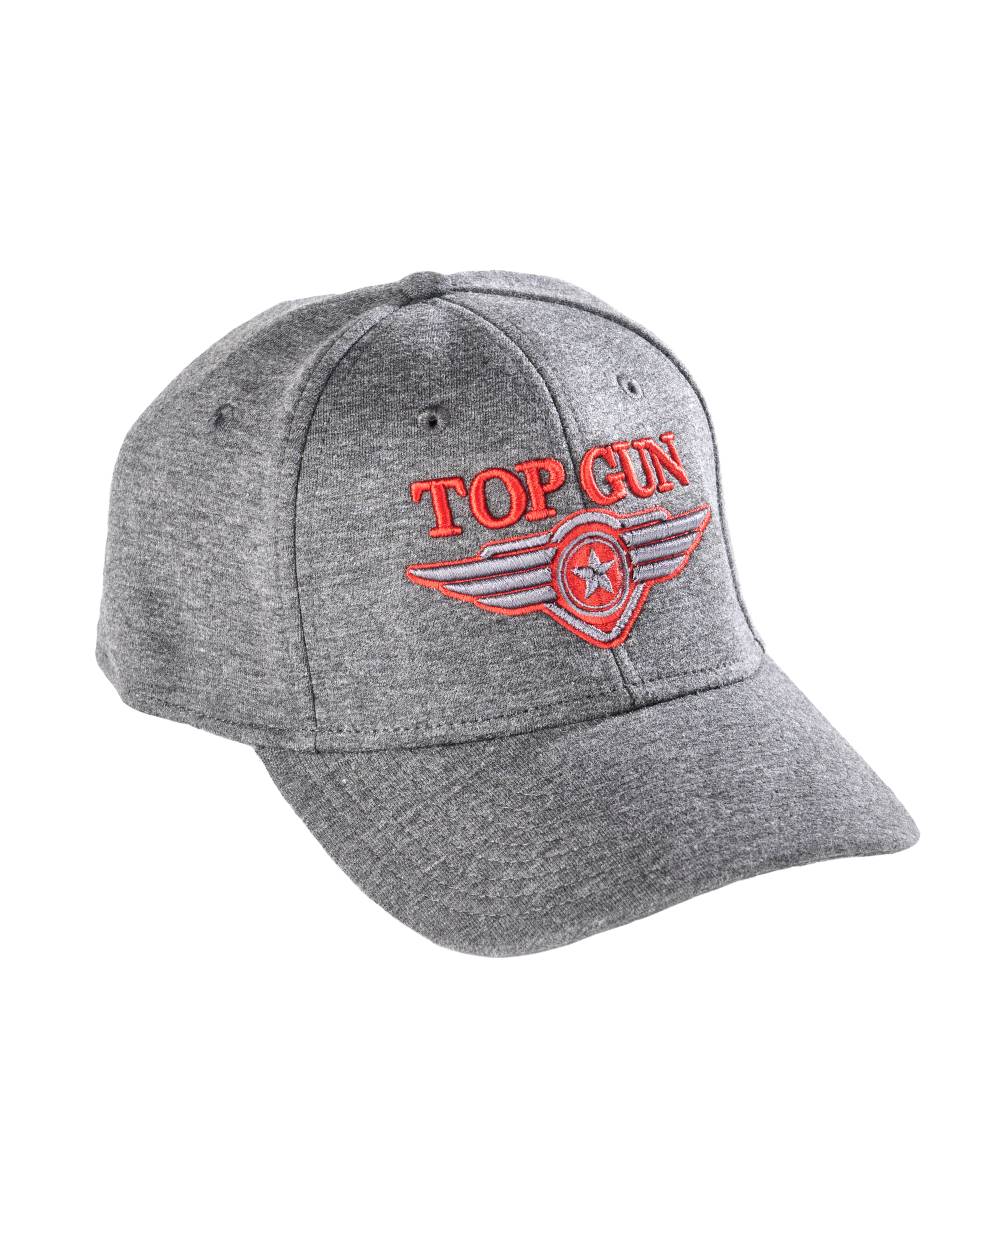 Snapback Top | Shop Gun Top Gun® Cap TG2019-3167 Deutschland